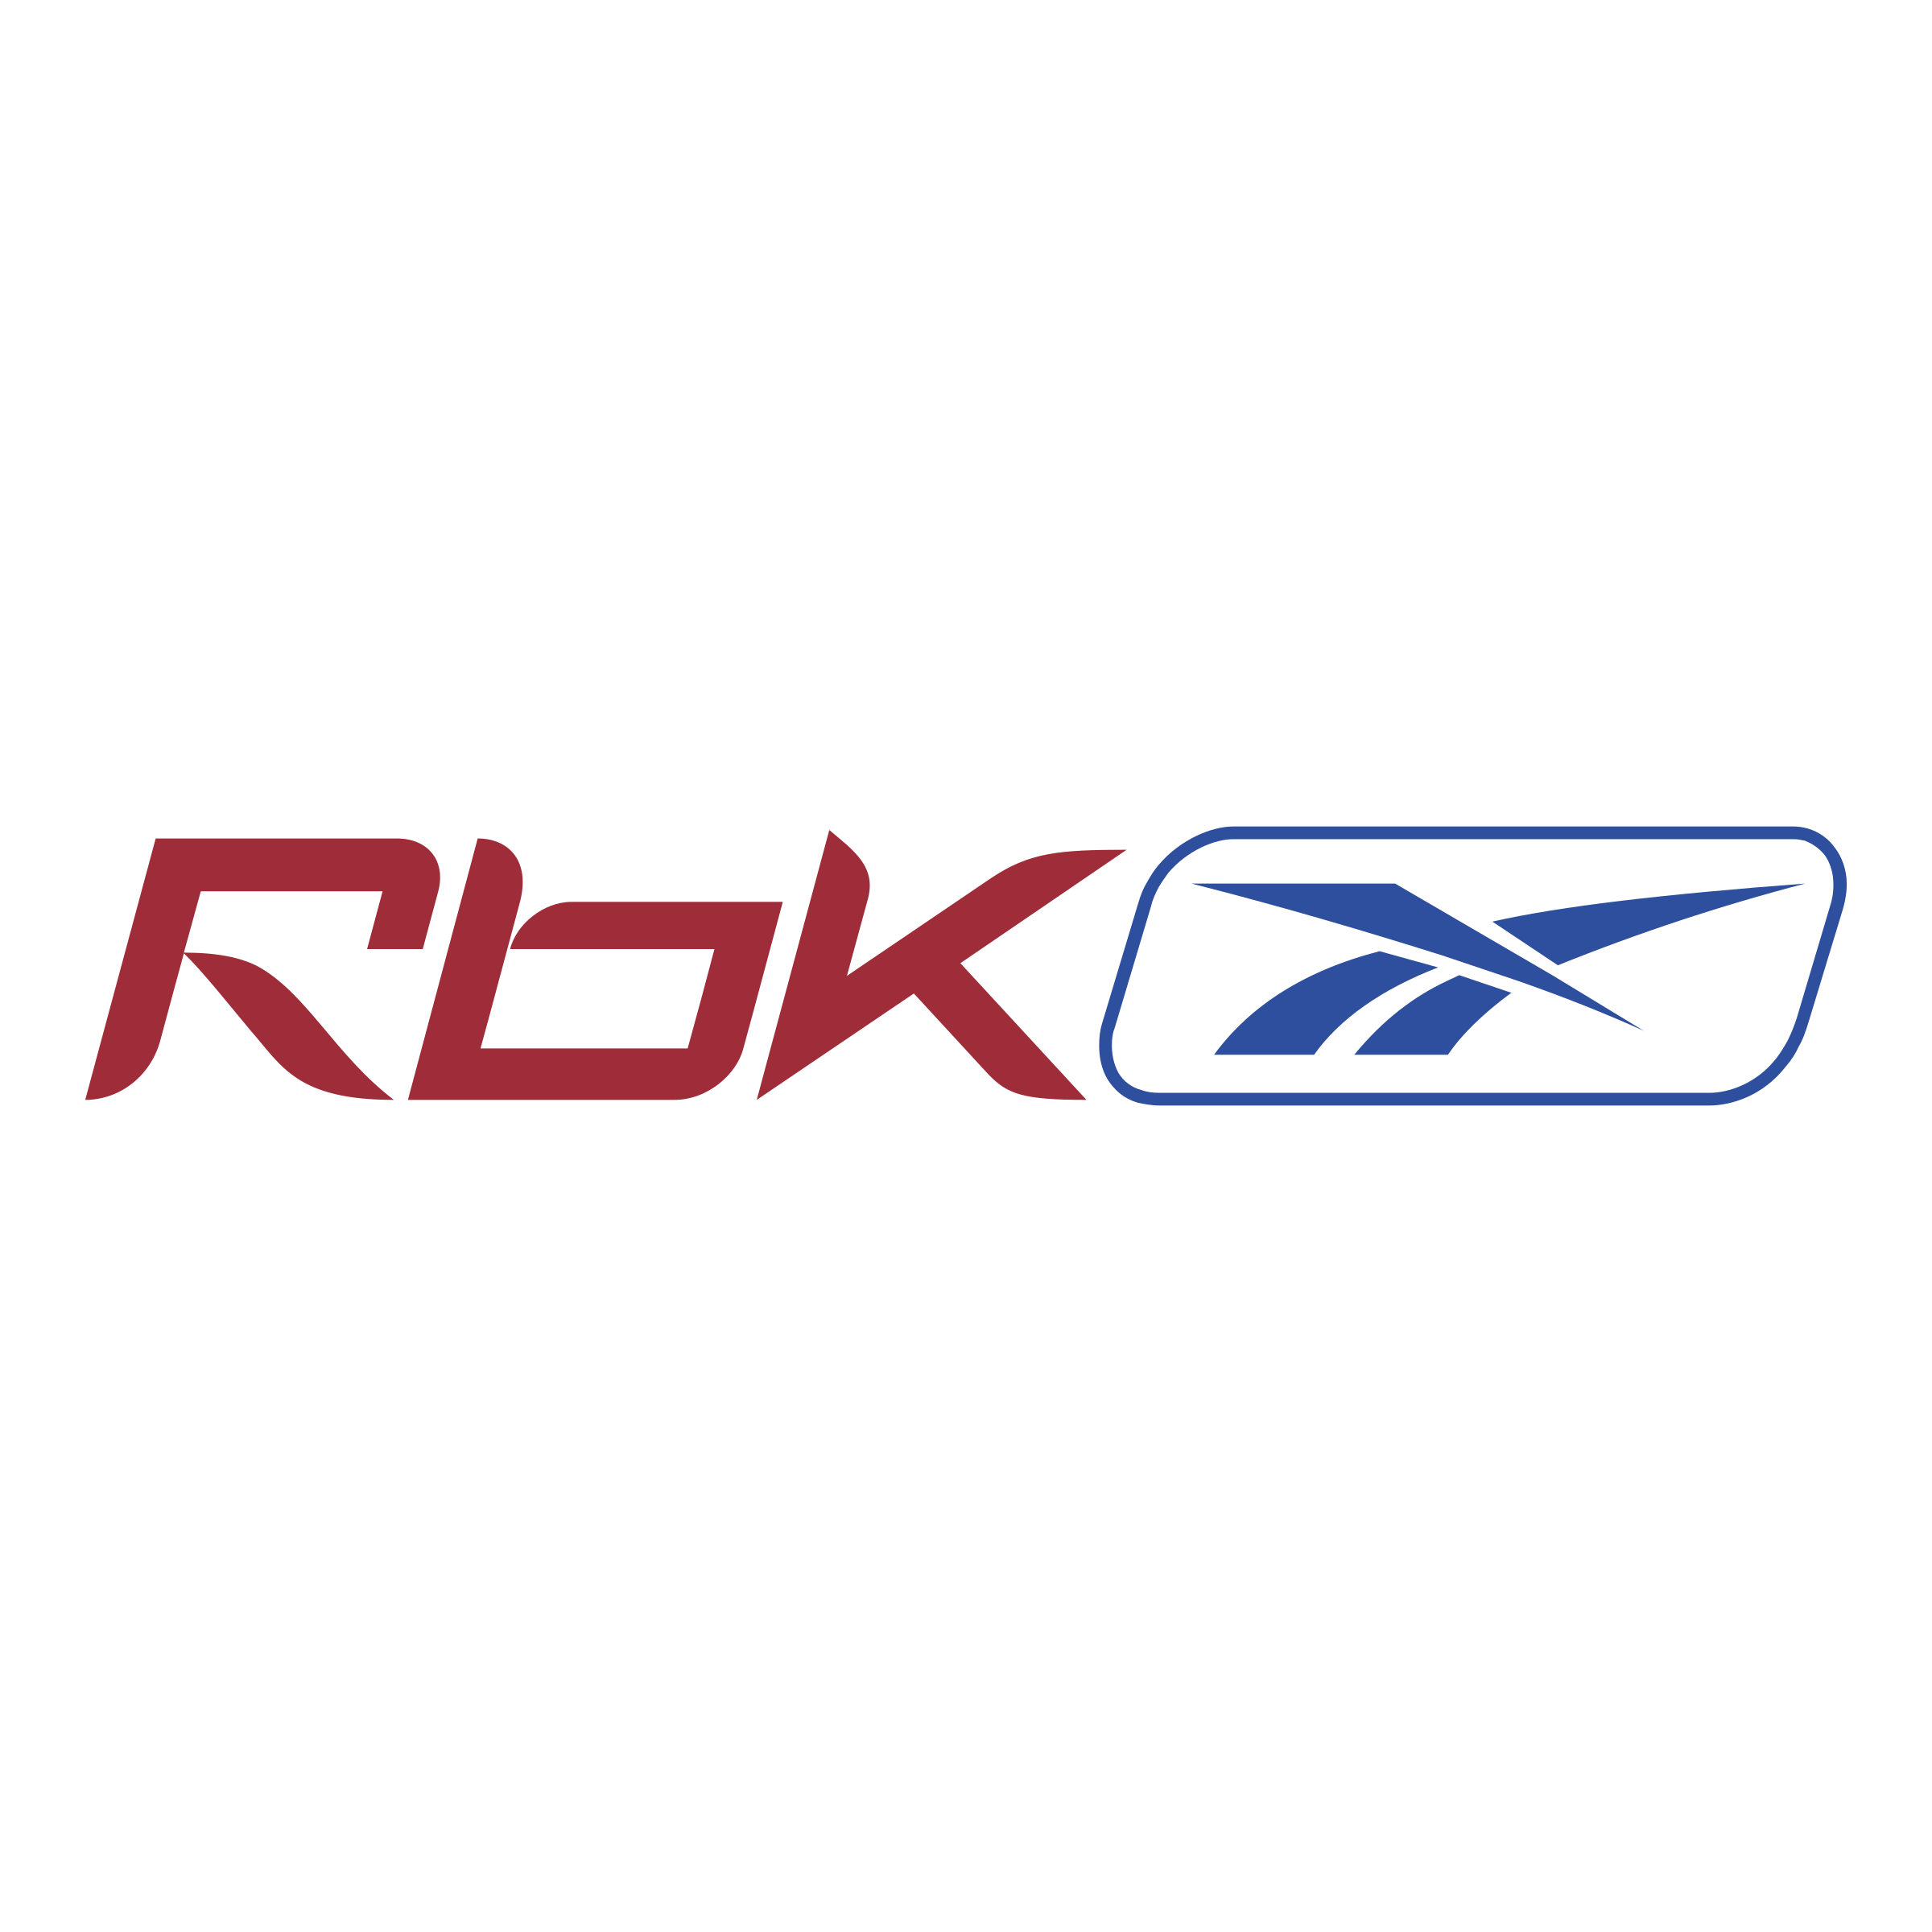 Reebok Supply Logo - Rbk Reebok Logo PNG Transparent & SVG Vector - Freebie Supply